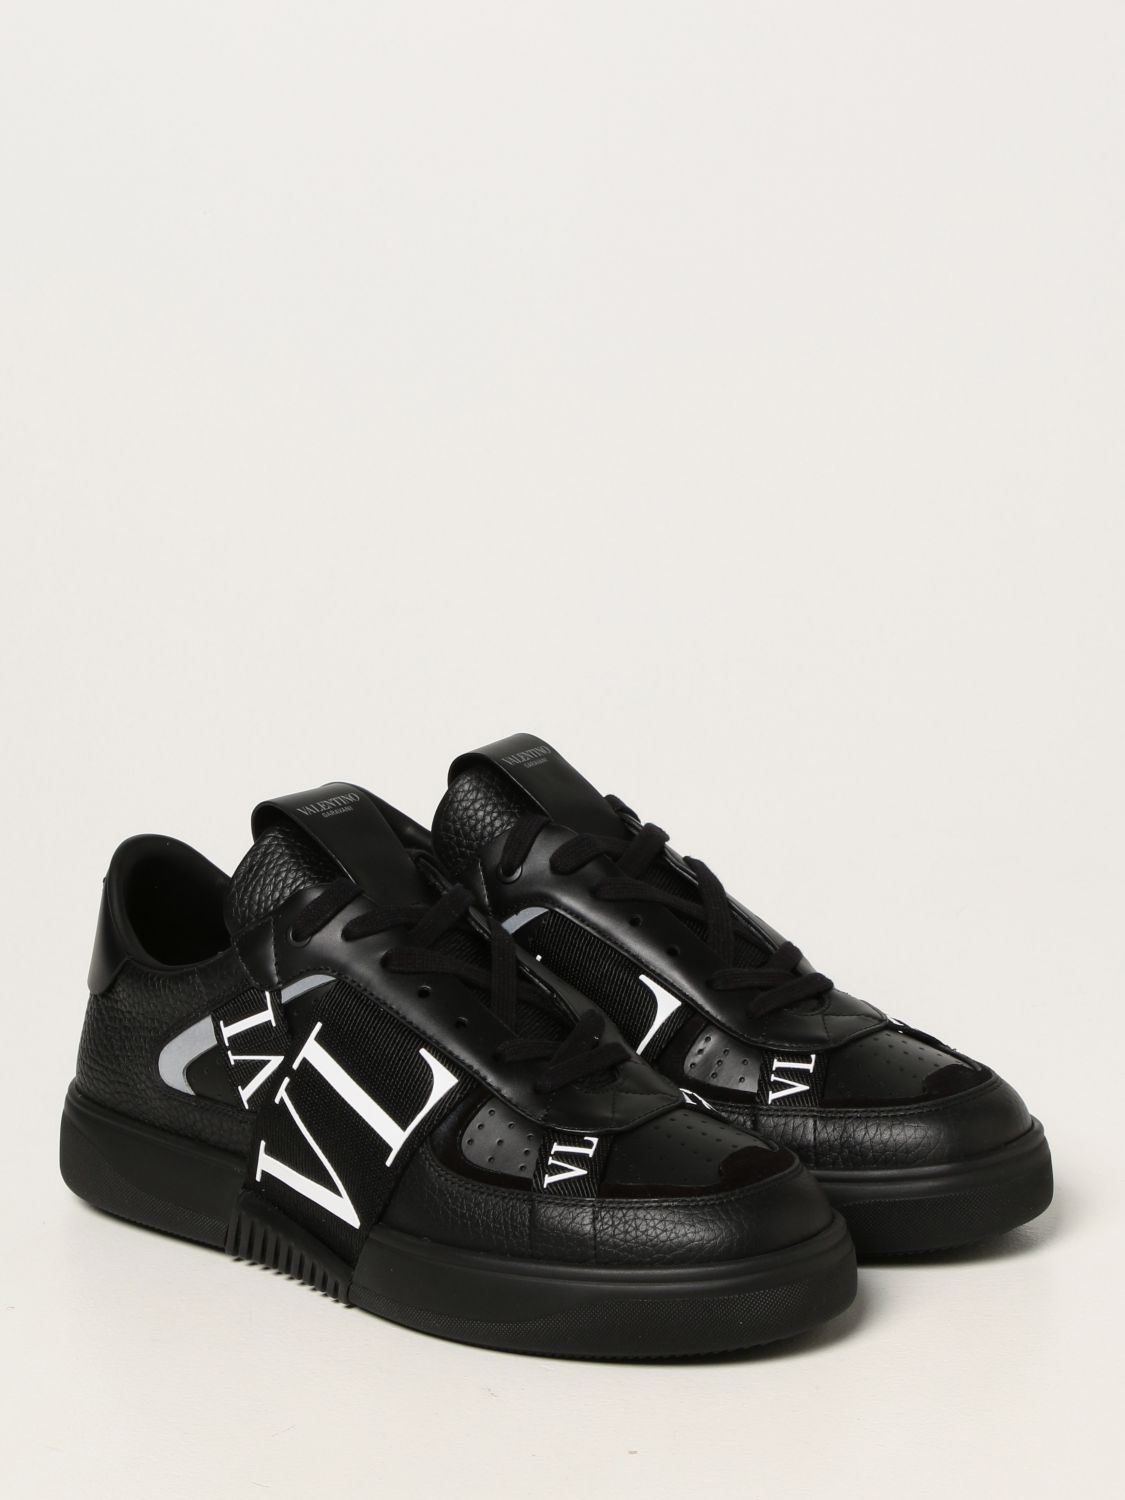 VALENTINO GARAVANI: leather sneakers with VLTN logo - Black | Valentino ...